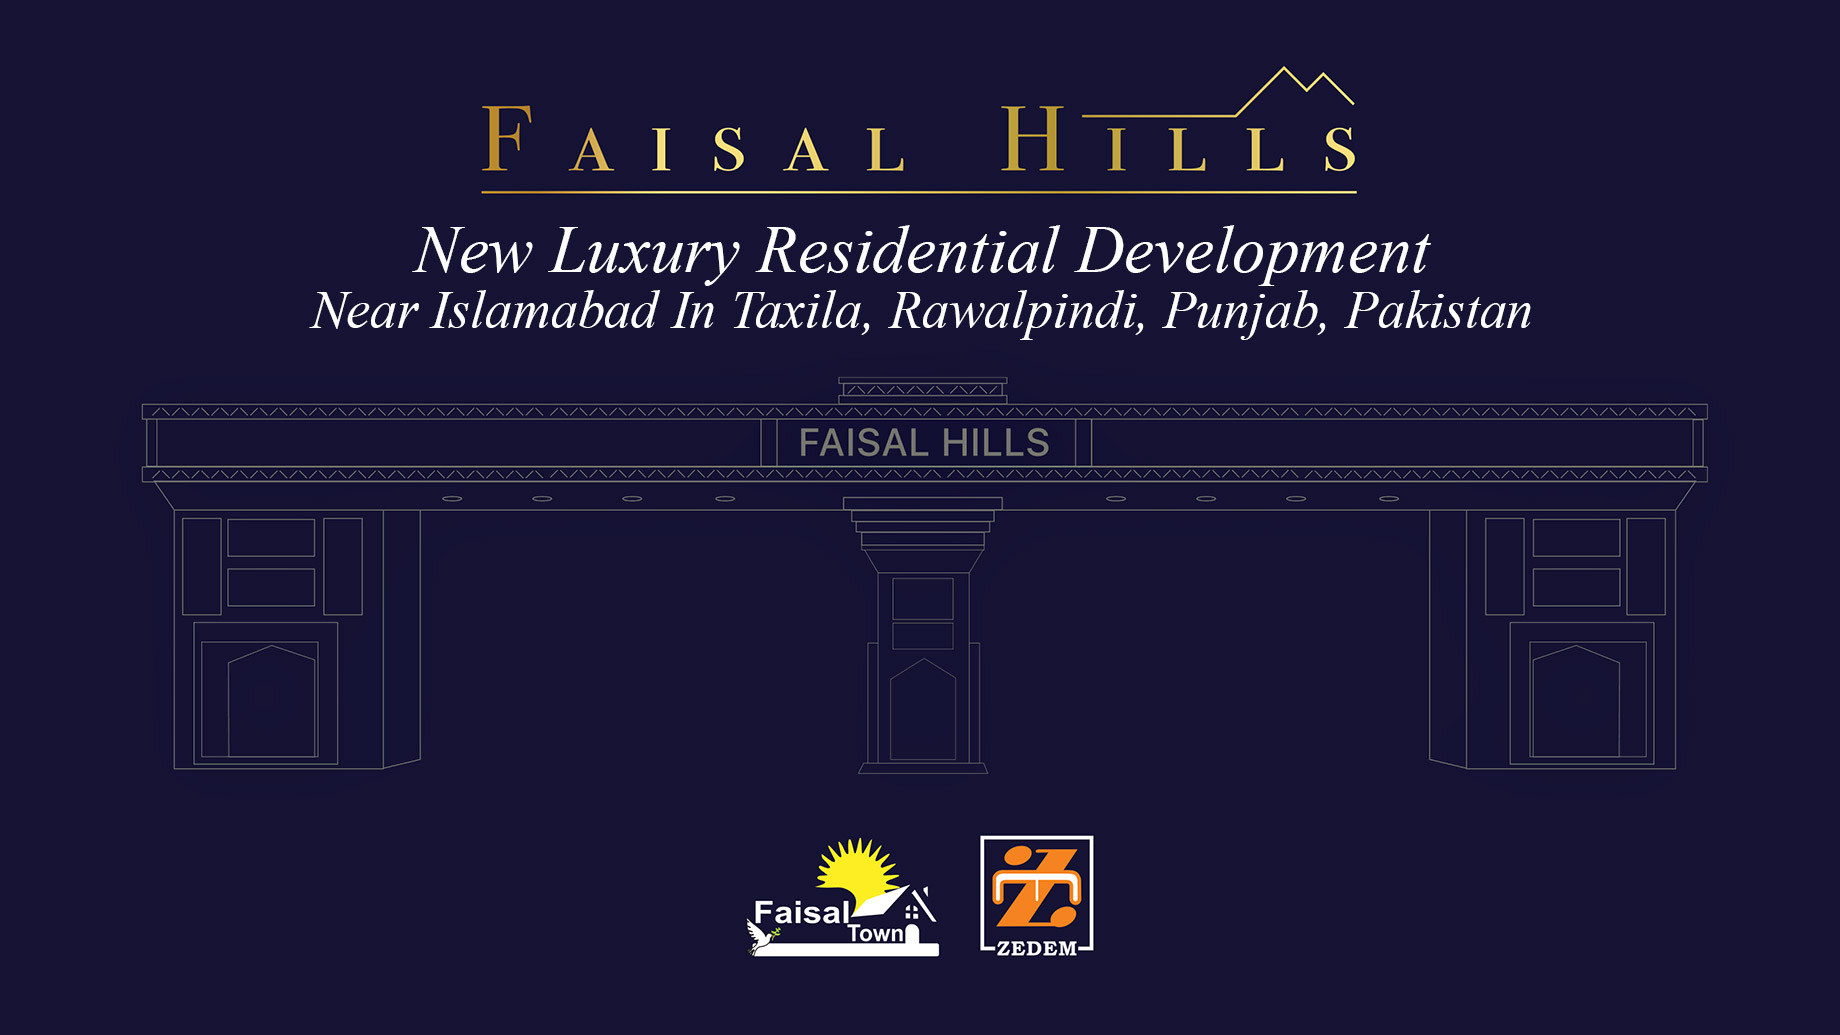 Faisal Hills – New Luxury Residential Development Near Islamabad In Taxila, Rawalpindi, Punjab, Pakistan